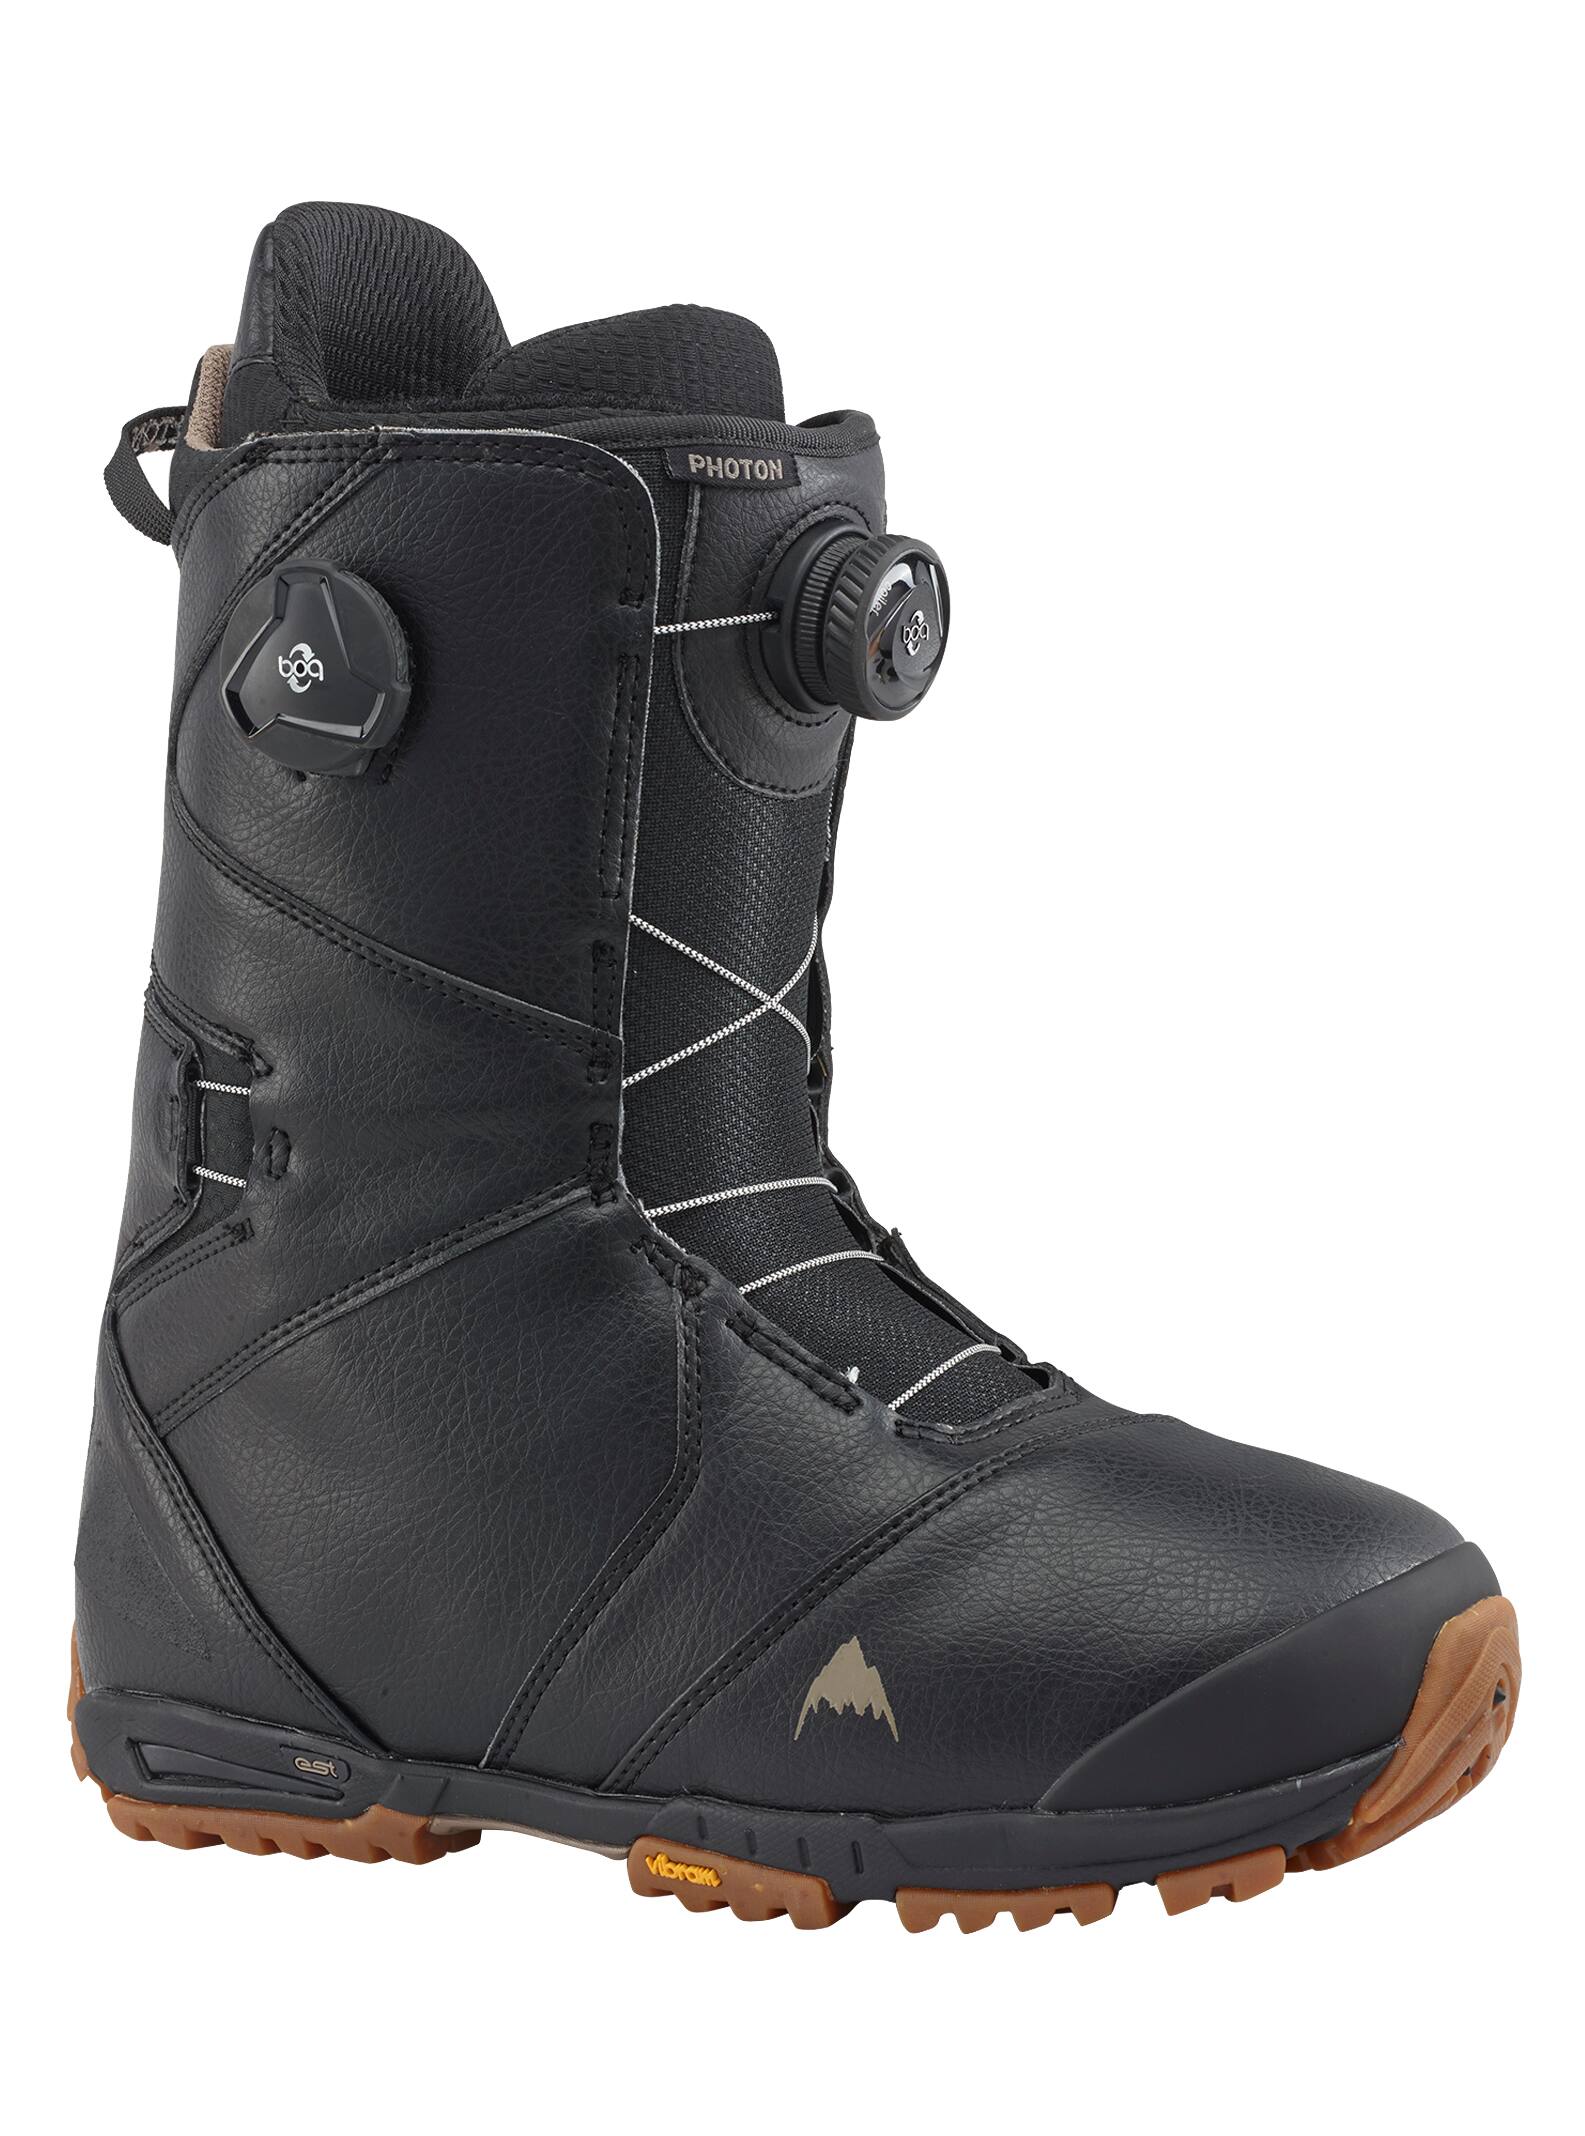 Burton - Boots de snowboard Photon Boa® homme, Black / Gum, 105